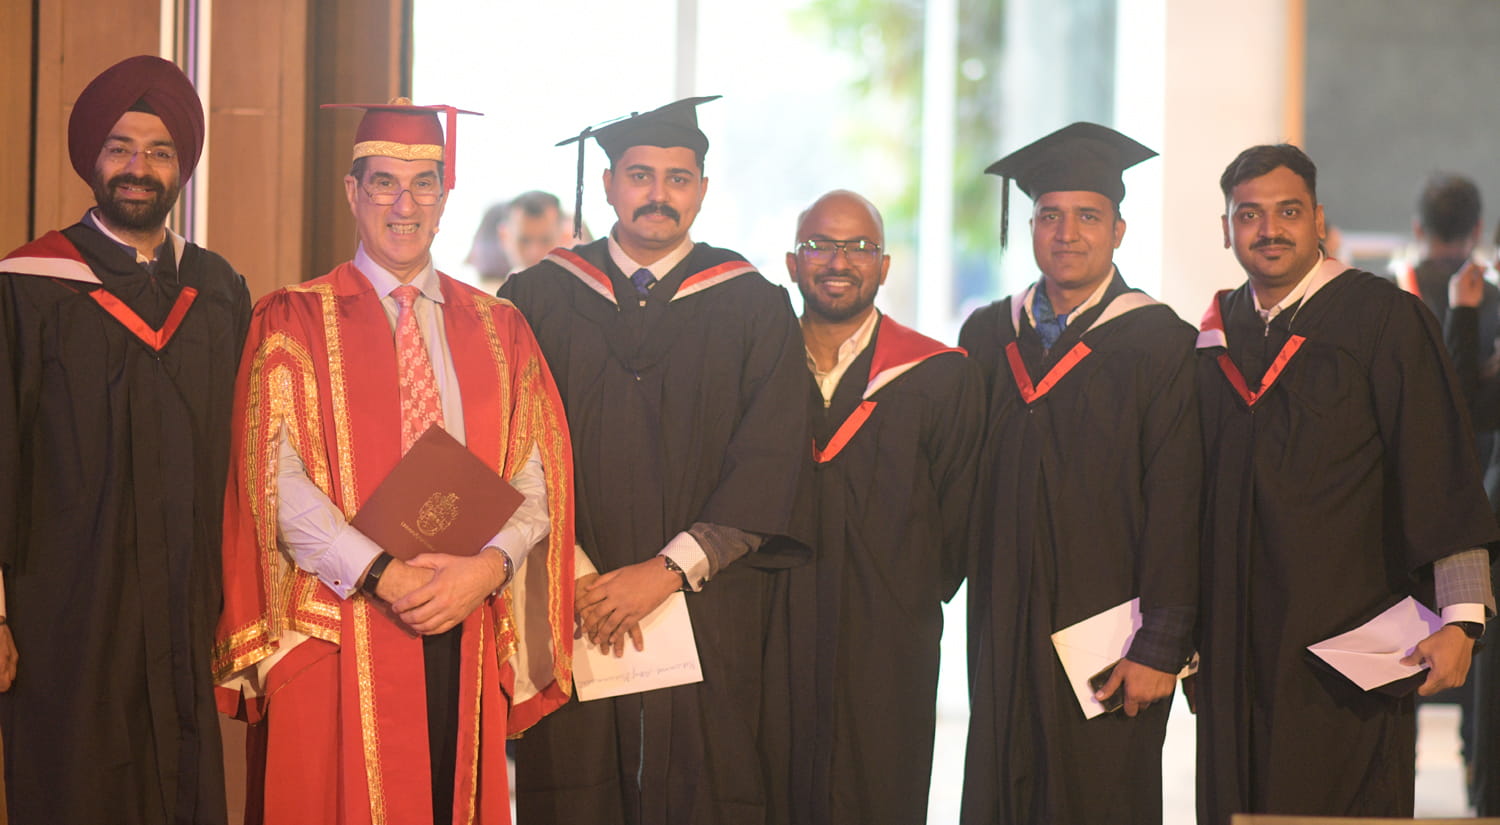 India Graduation graduates with Vice-Chancellor